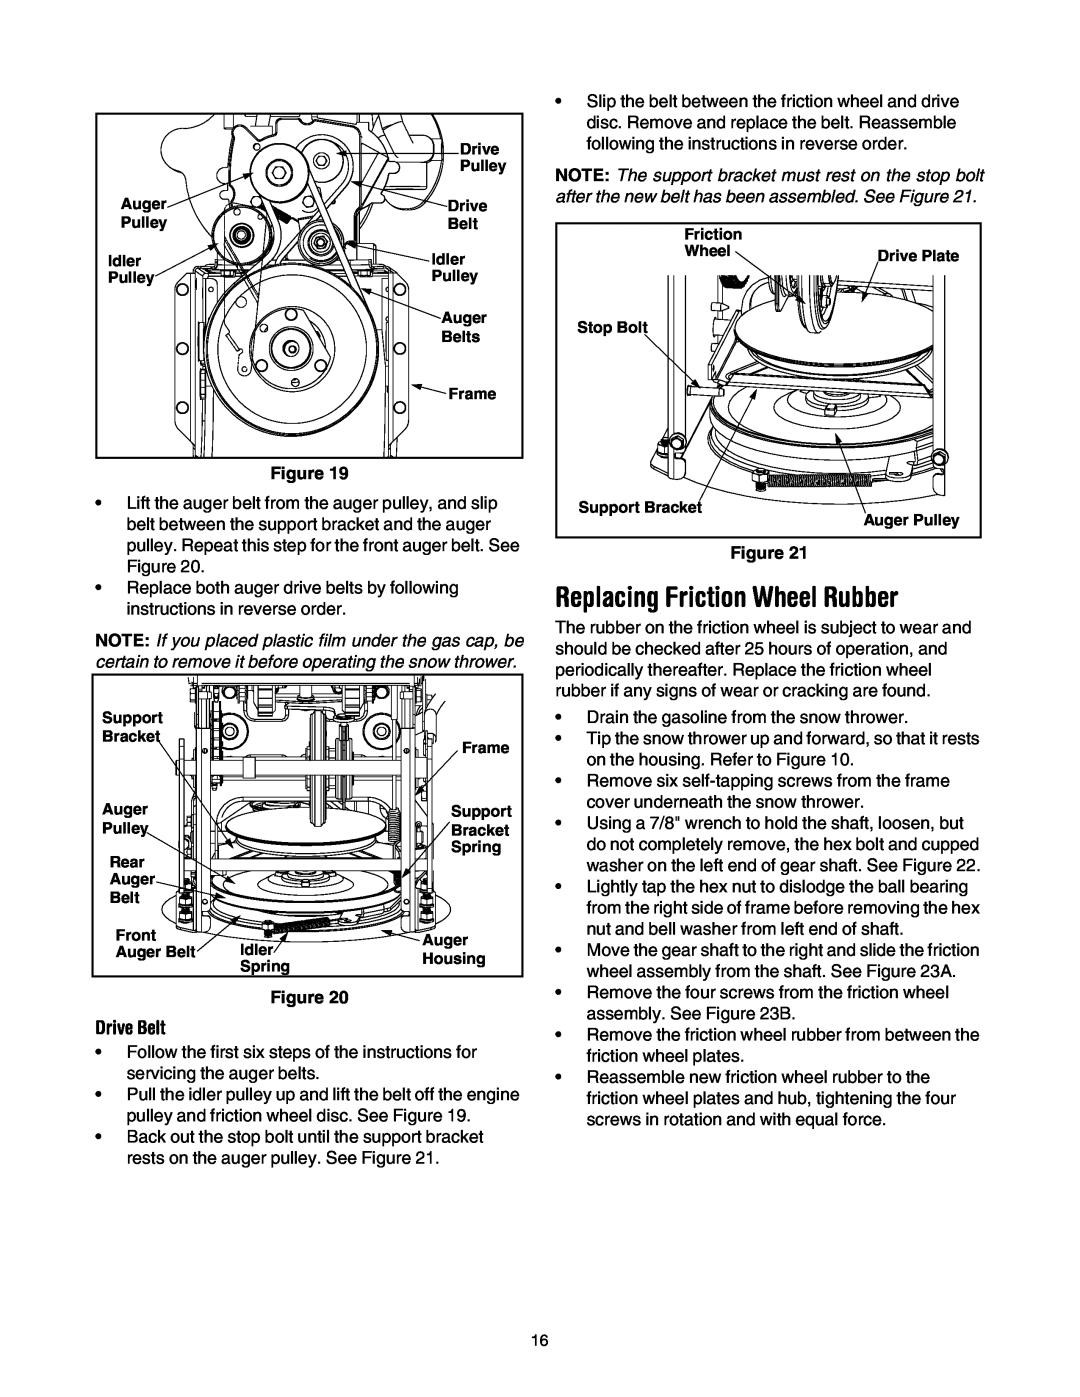 Troy-Bilt OEM-390-679 manual Replacing Friction Wheel Rubber, Drive Belt 